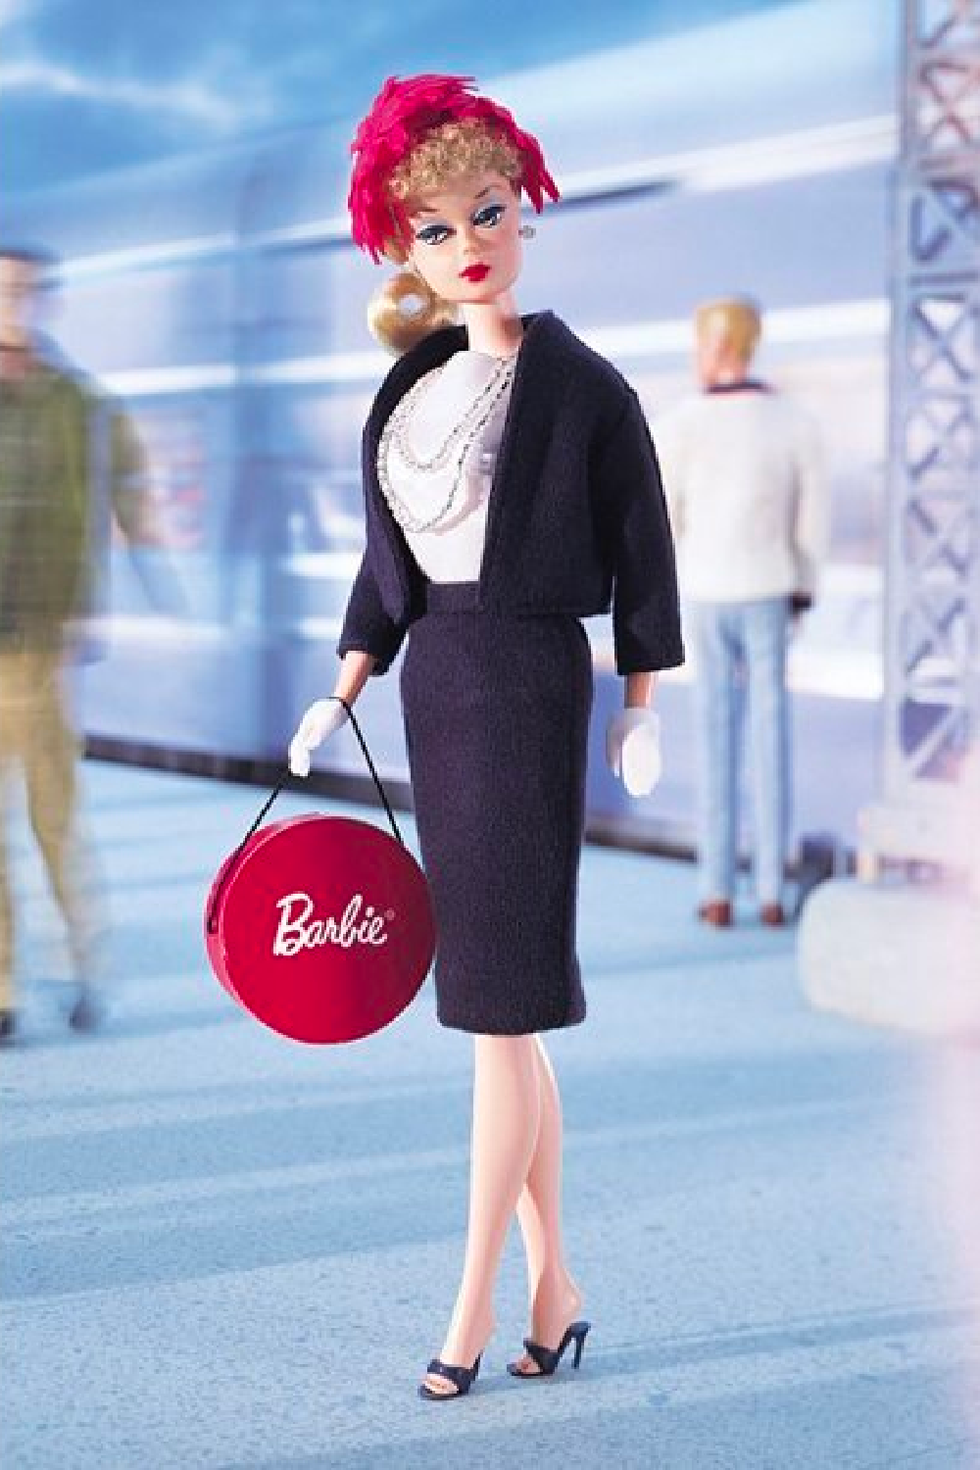 Vintage Barbie Doll Accessories Collection, Barbie Clothes, Barbie  Accessories, Barbie Animal, Barbie Pool, Barbie Suitcase, Pants, Dress 